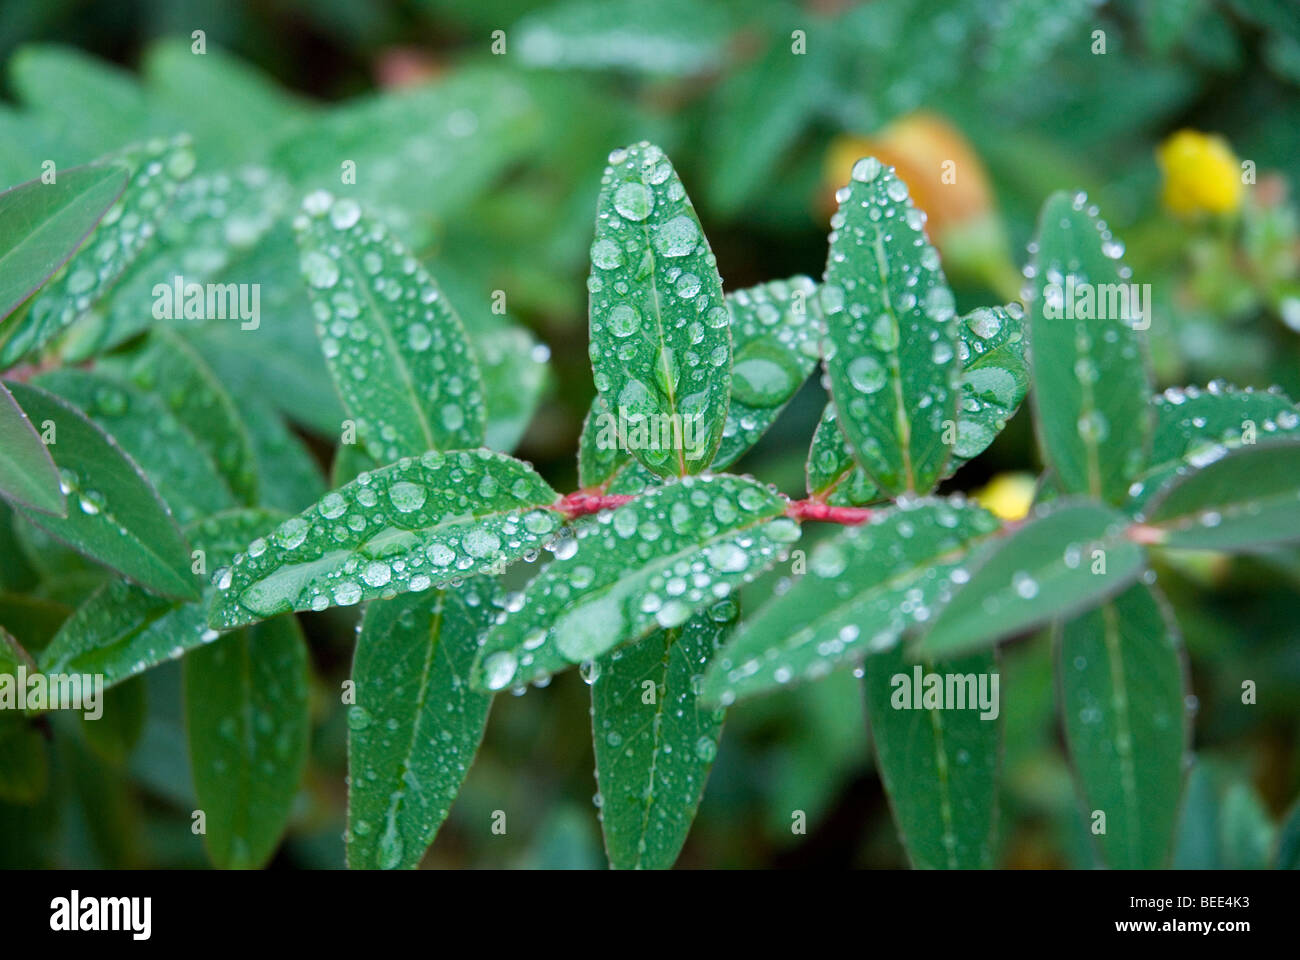 rain drops on waxy leaves Stock Photo